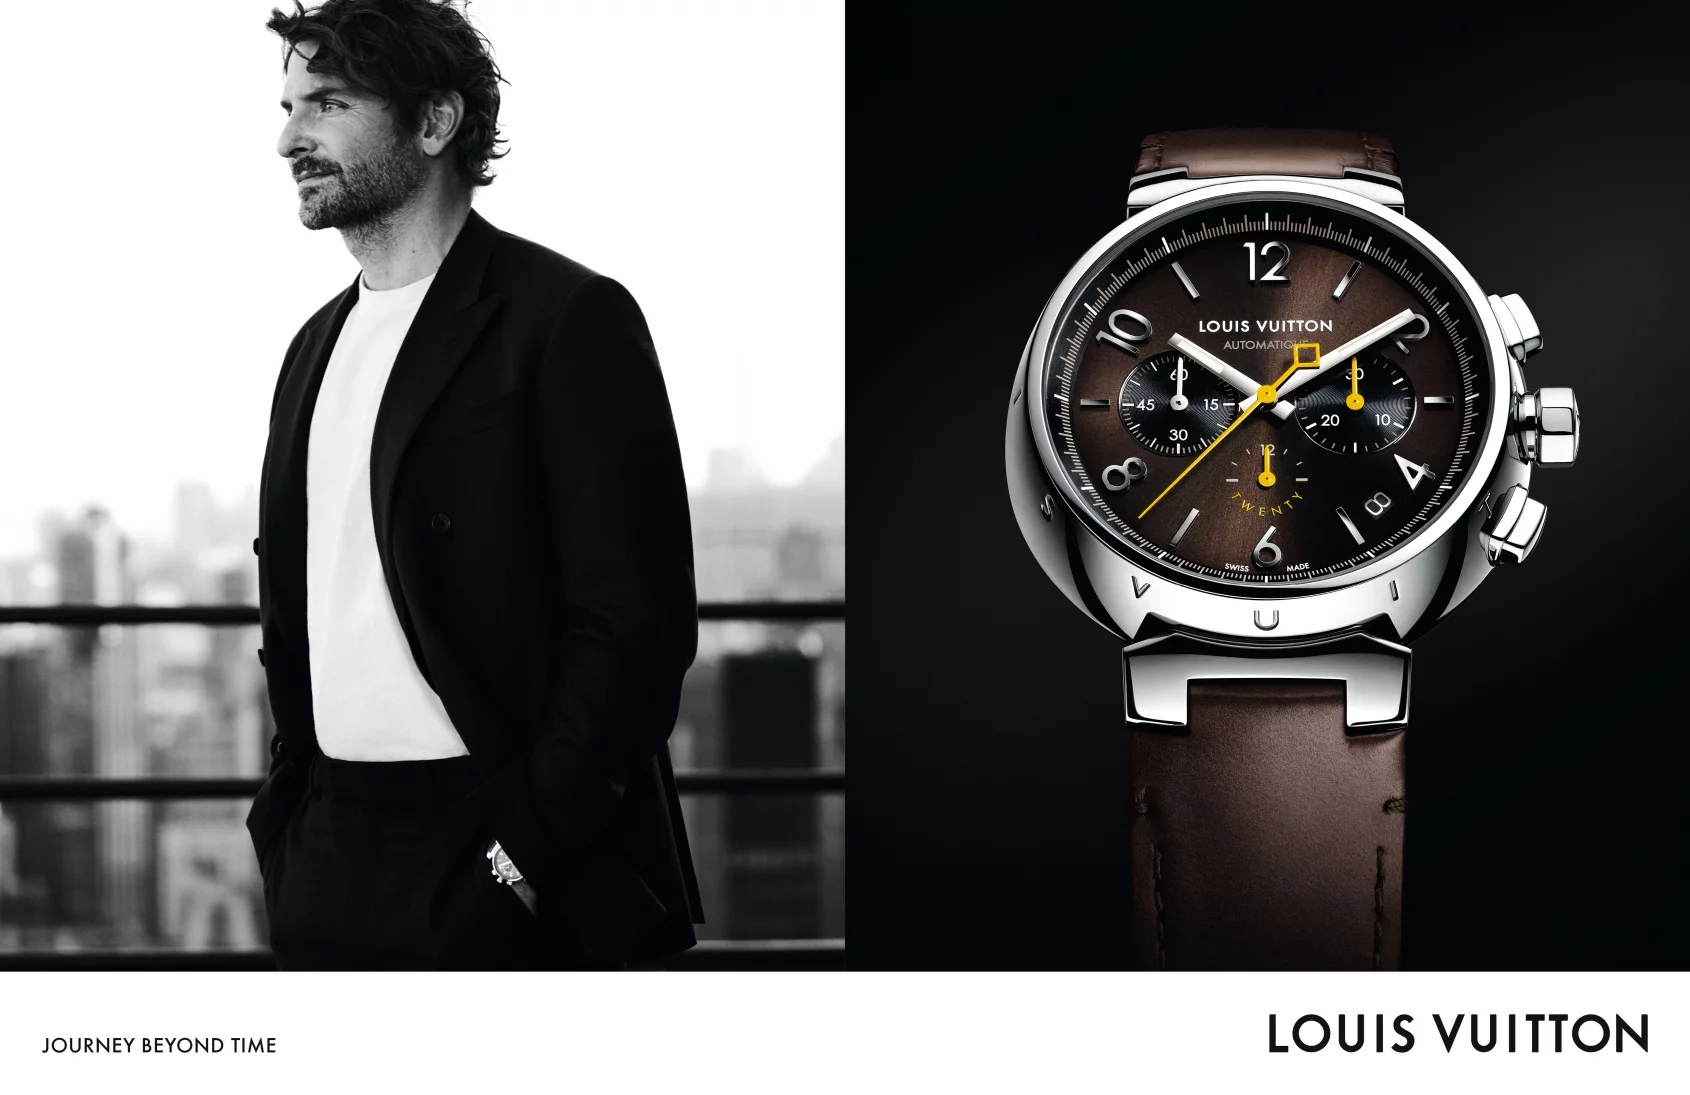 Bradley Cooper unveiled as new Louis Vuitton ambassador